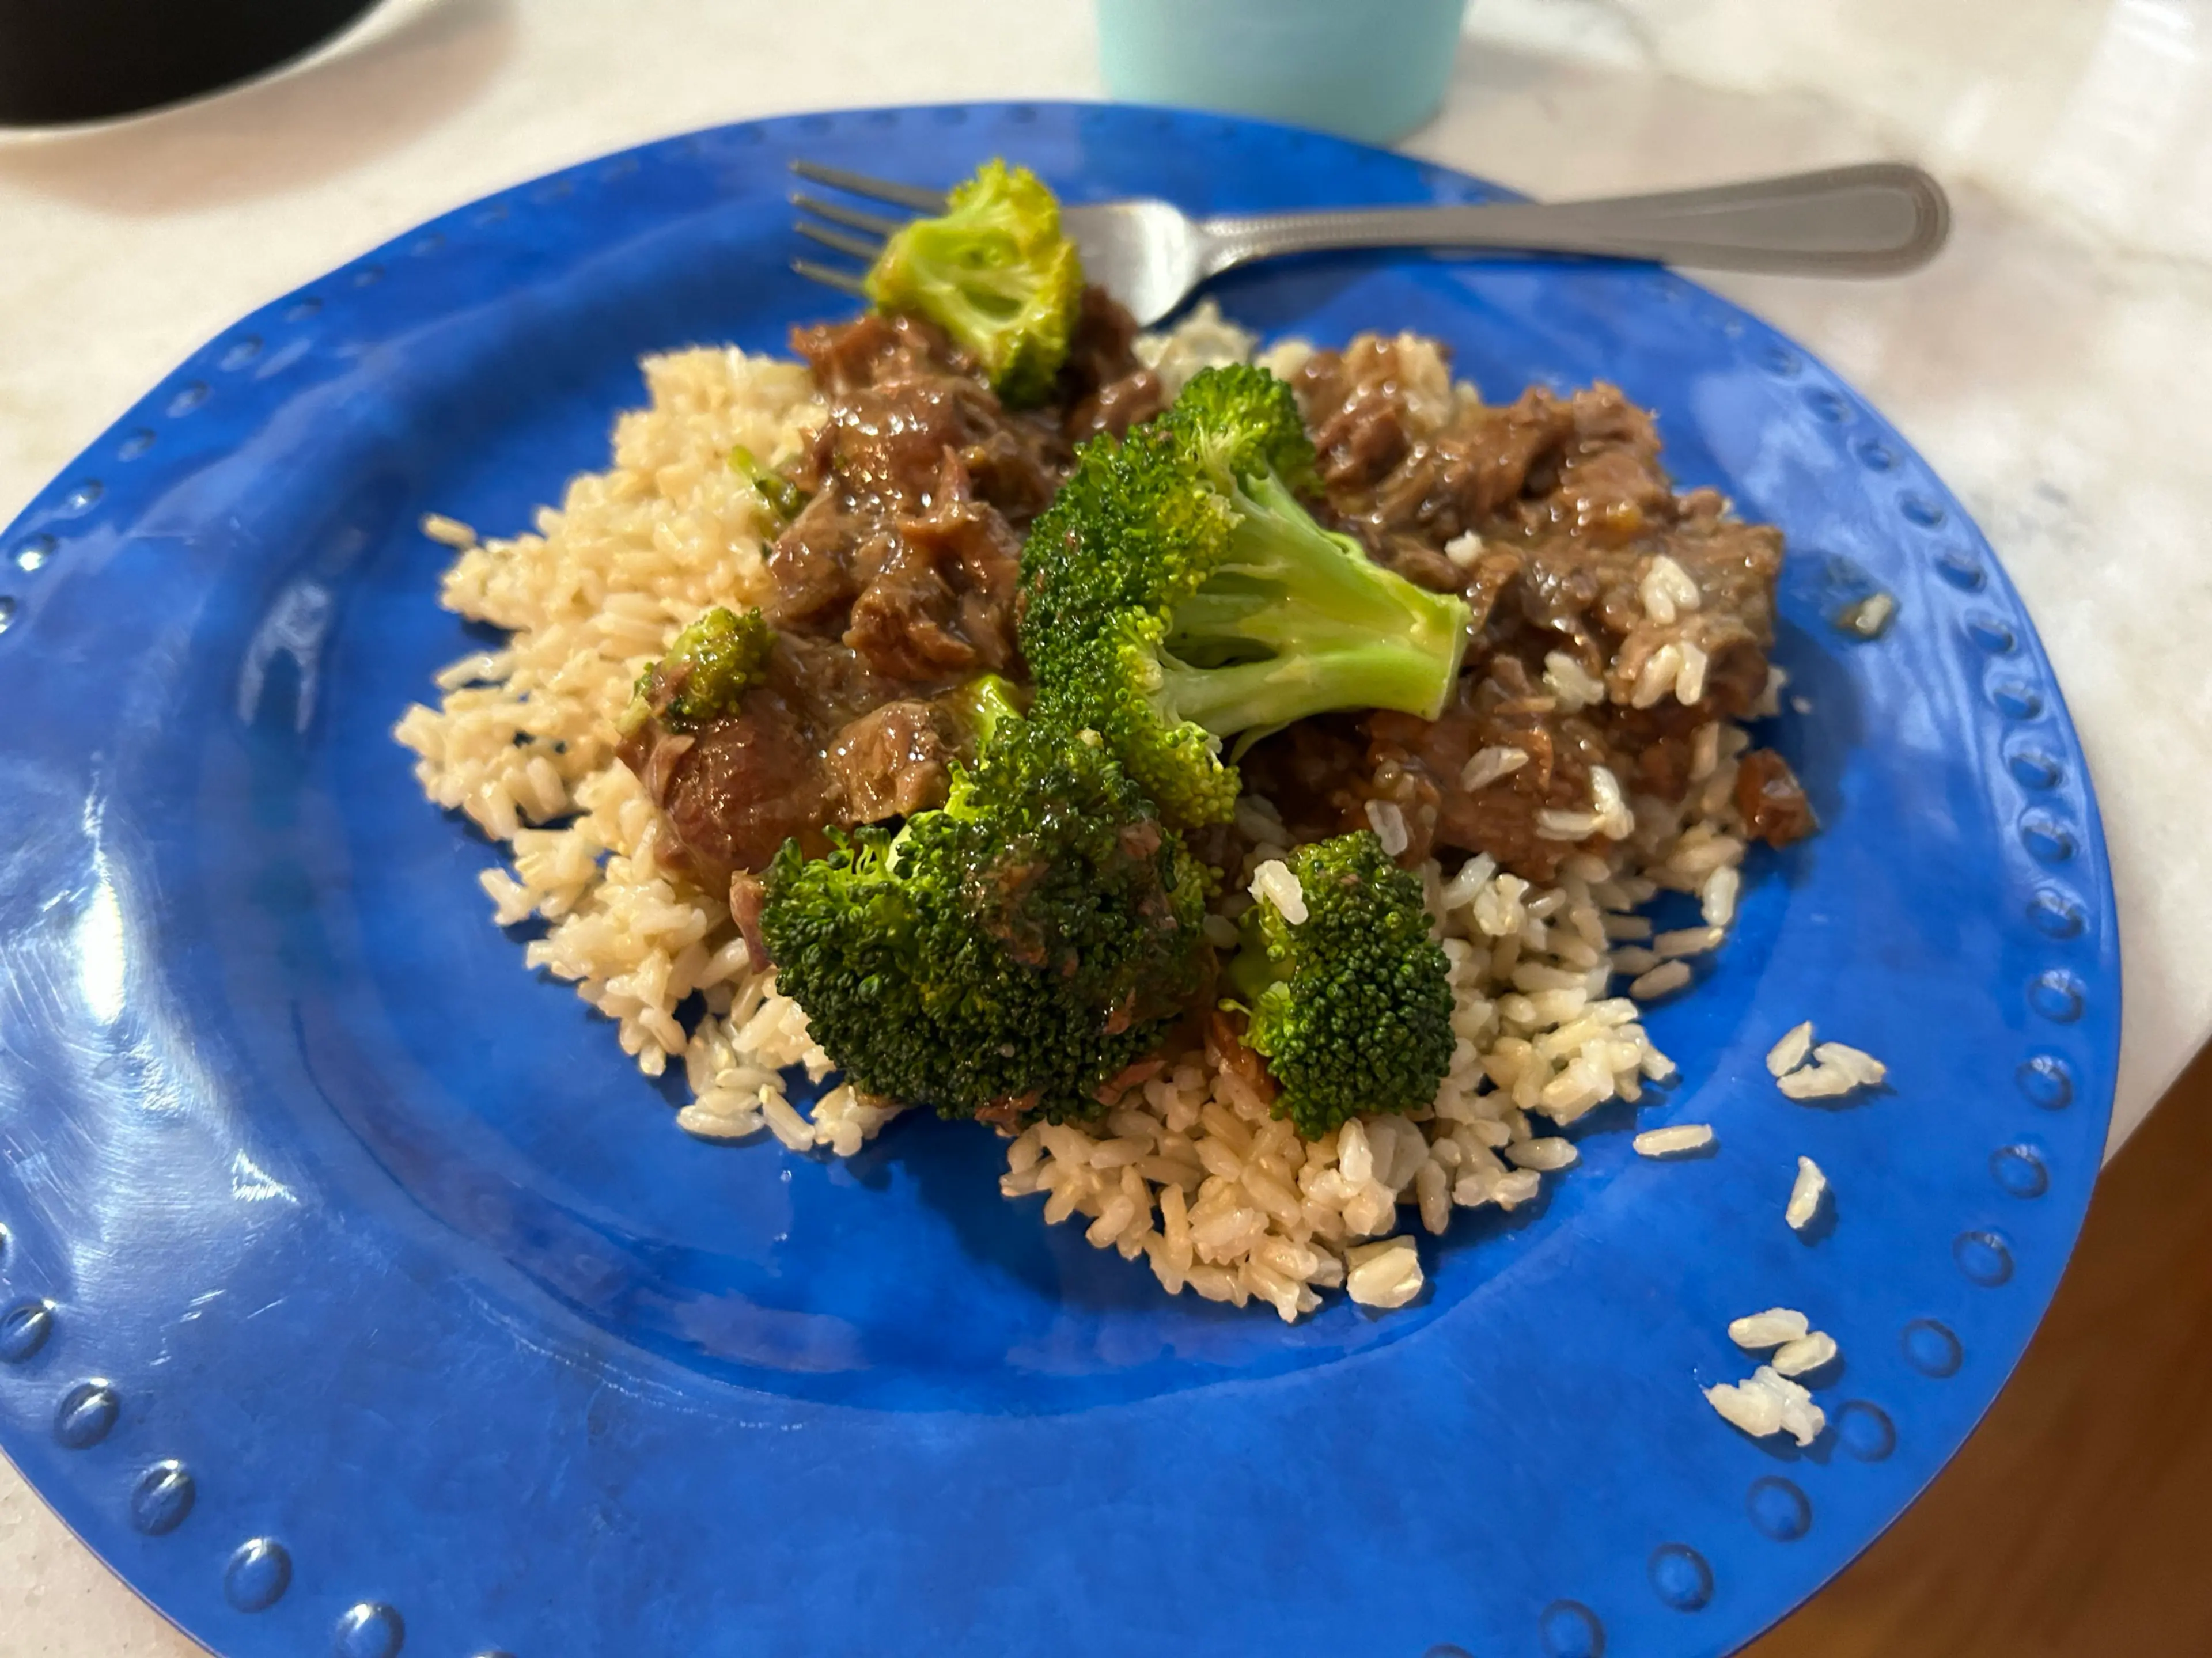 Crock Pot Beef and Broccoli